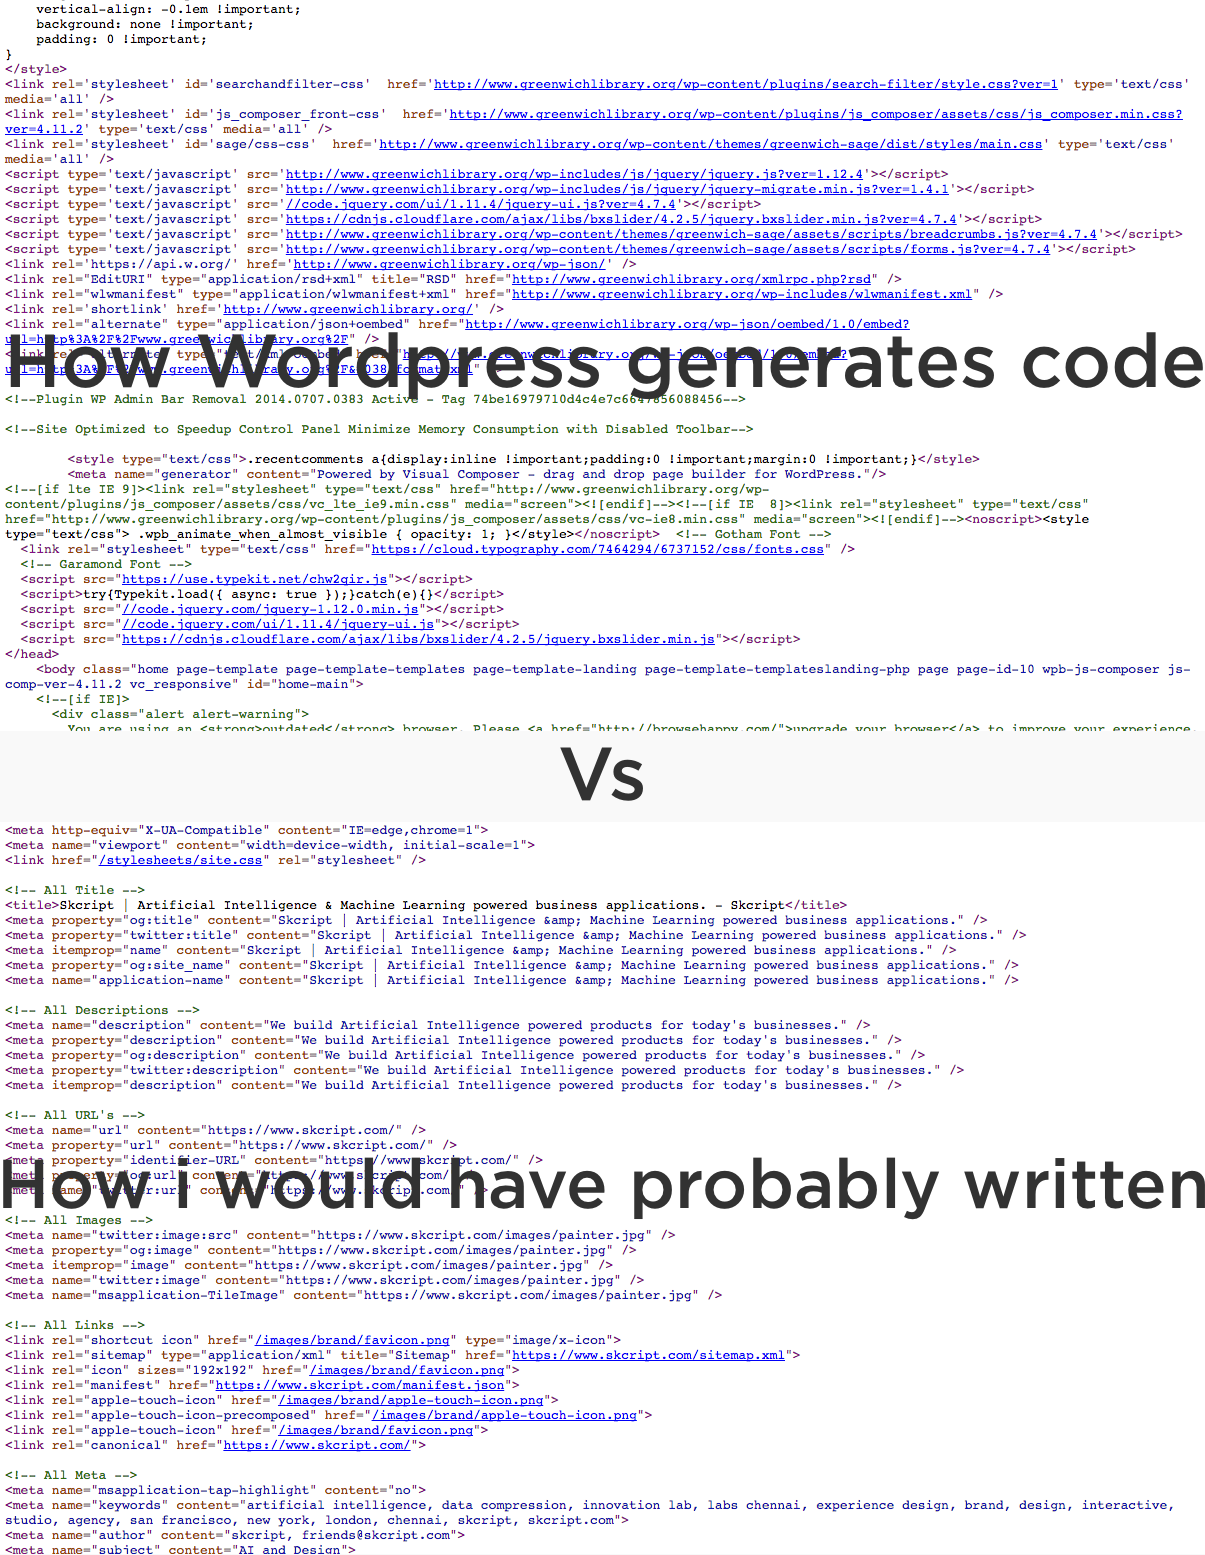 Wordpress code quality